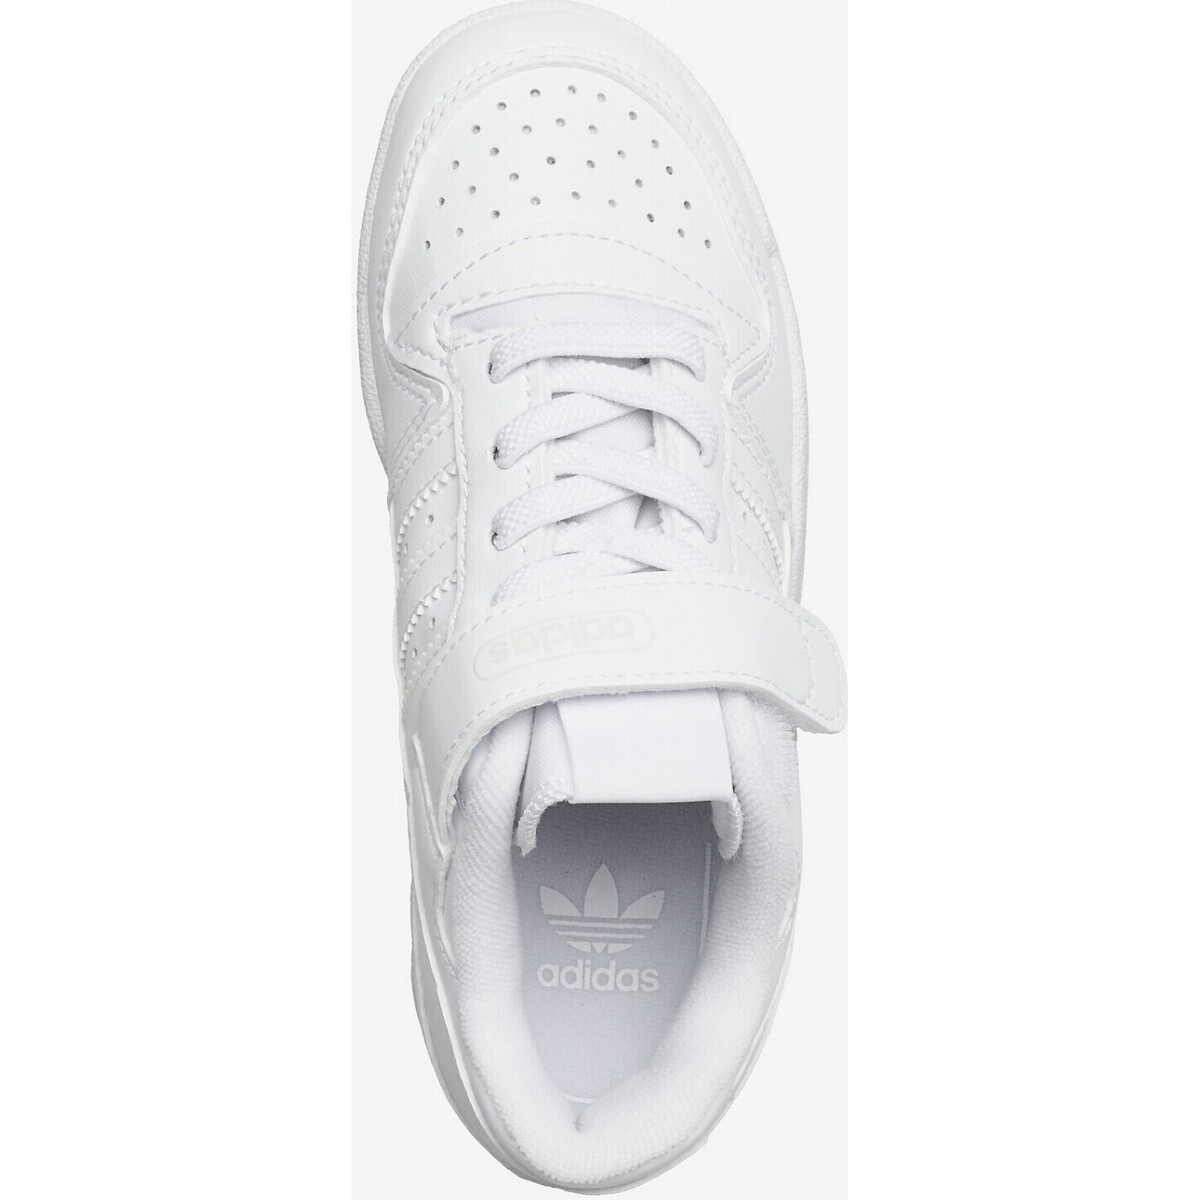 adidas Originals Blanc FORUM LOW C wRTHwP7r